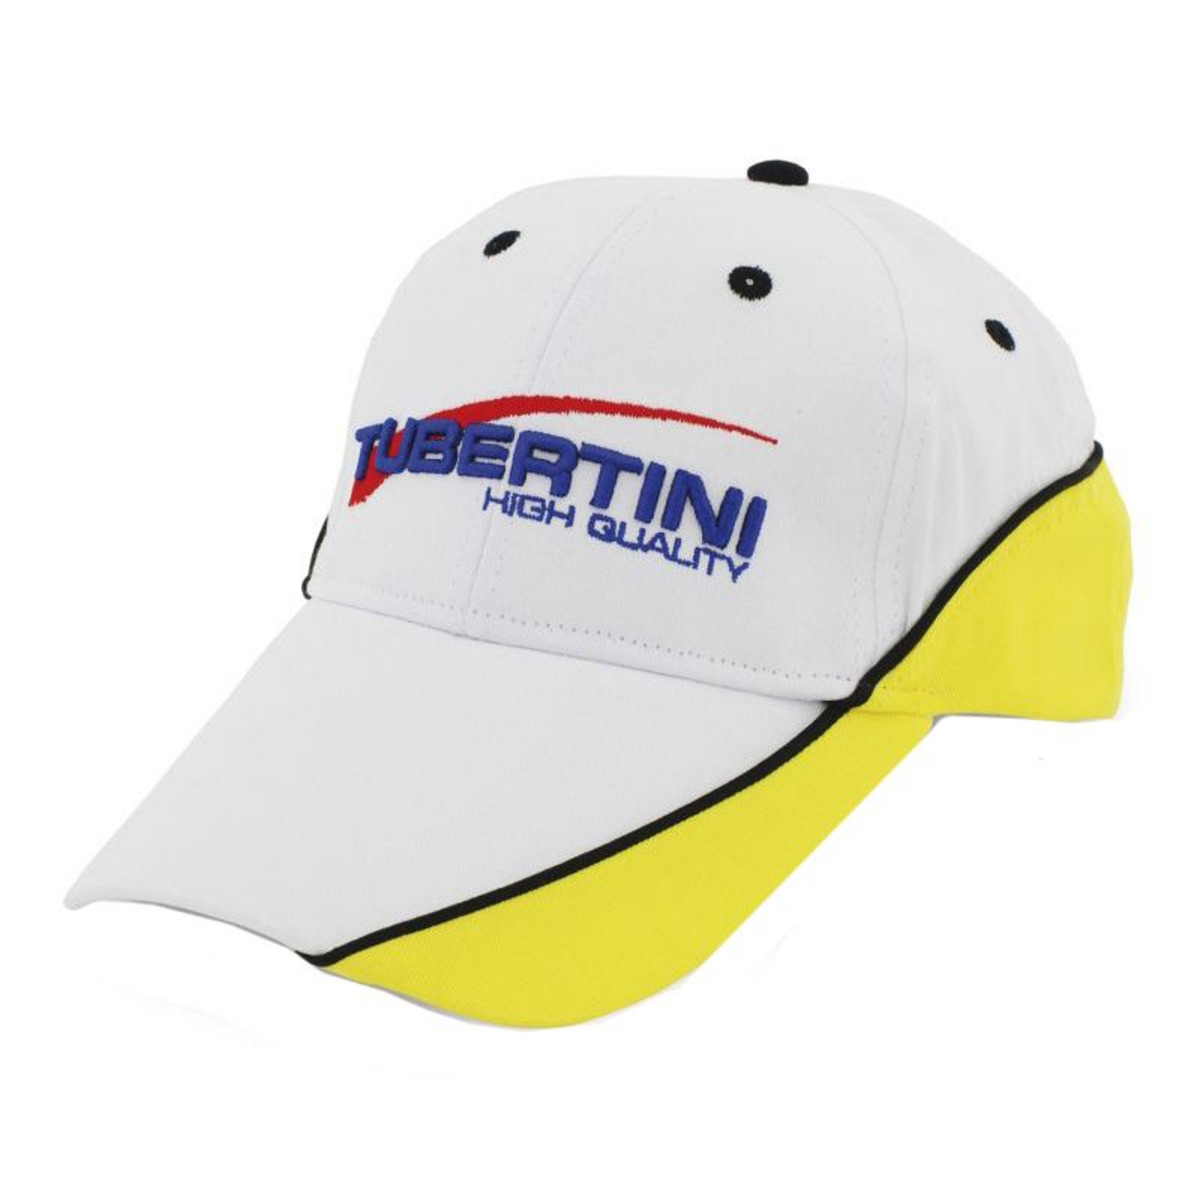 Tubertini Concept Yellow Cap - Concept Yellow Cap